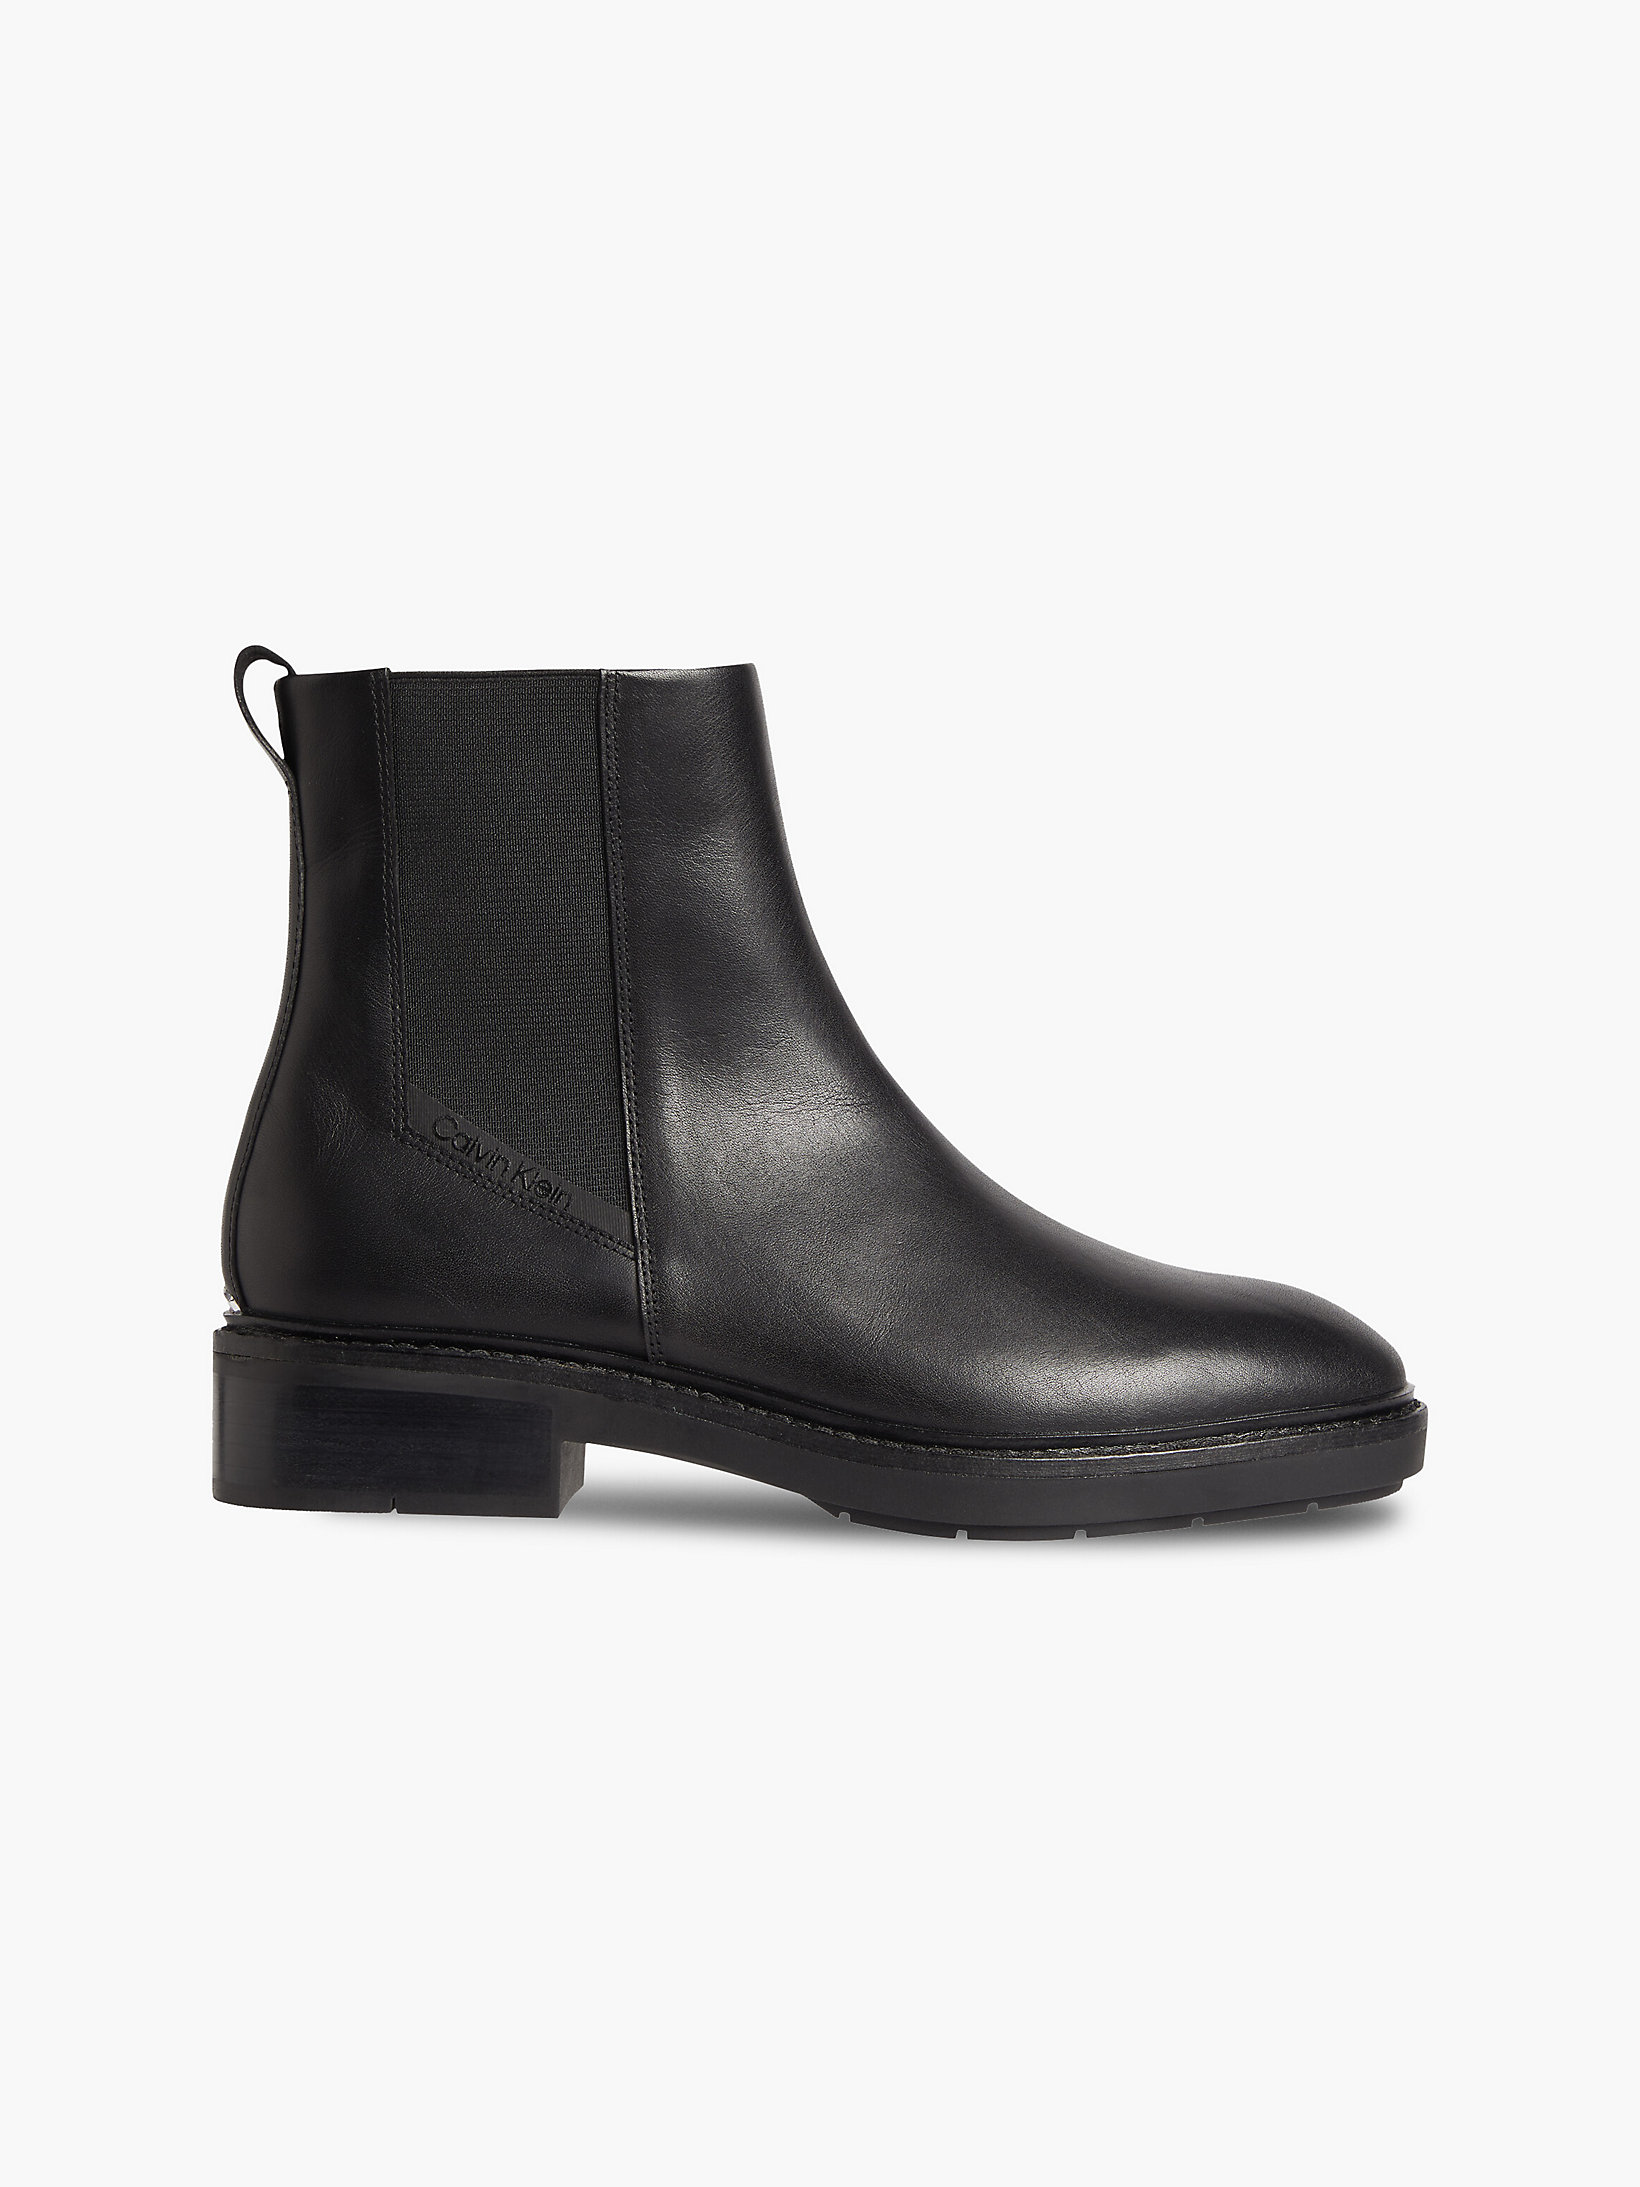 CK Black Leather Chelsea Boots undefined women Calvin Klein